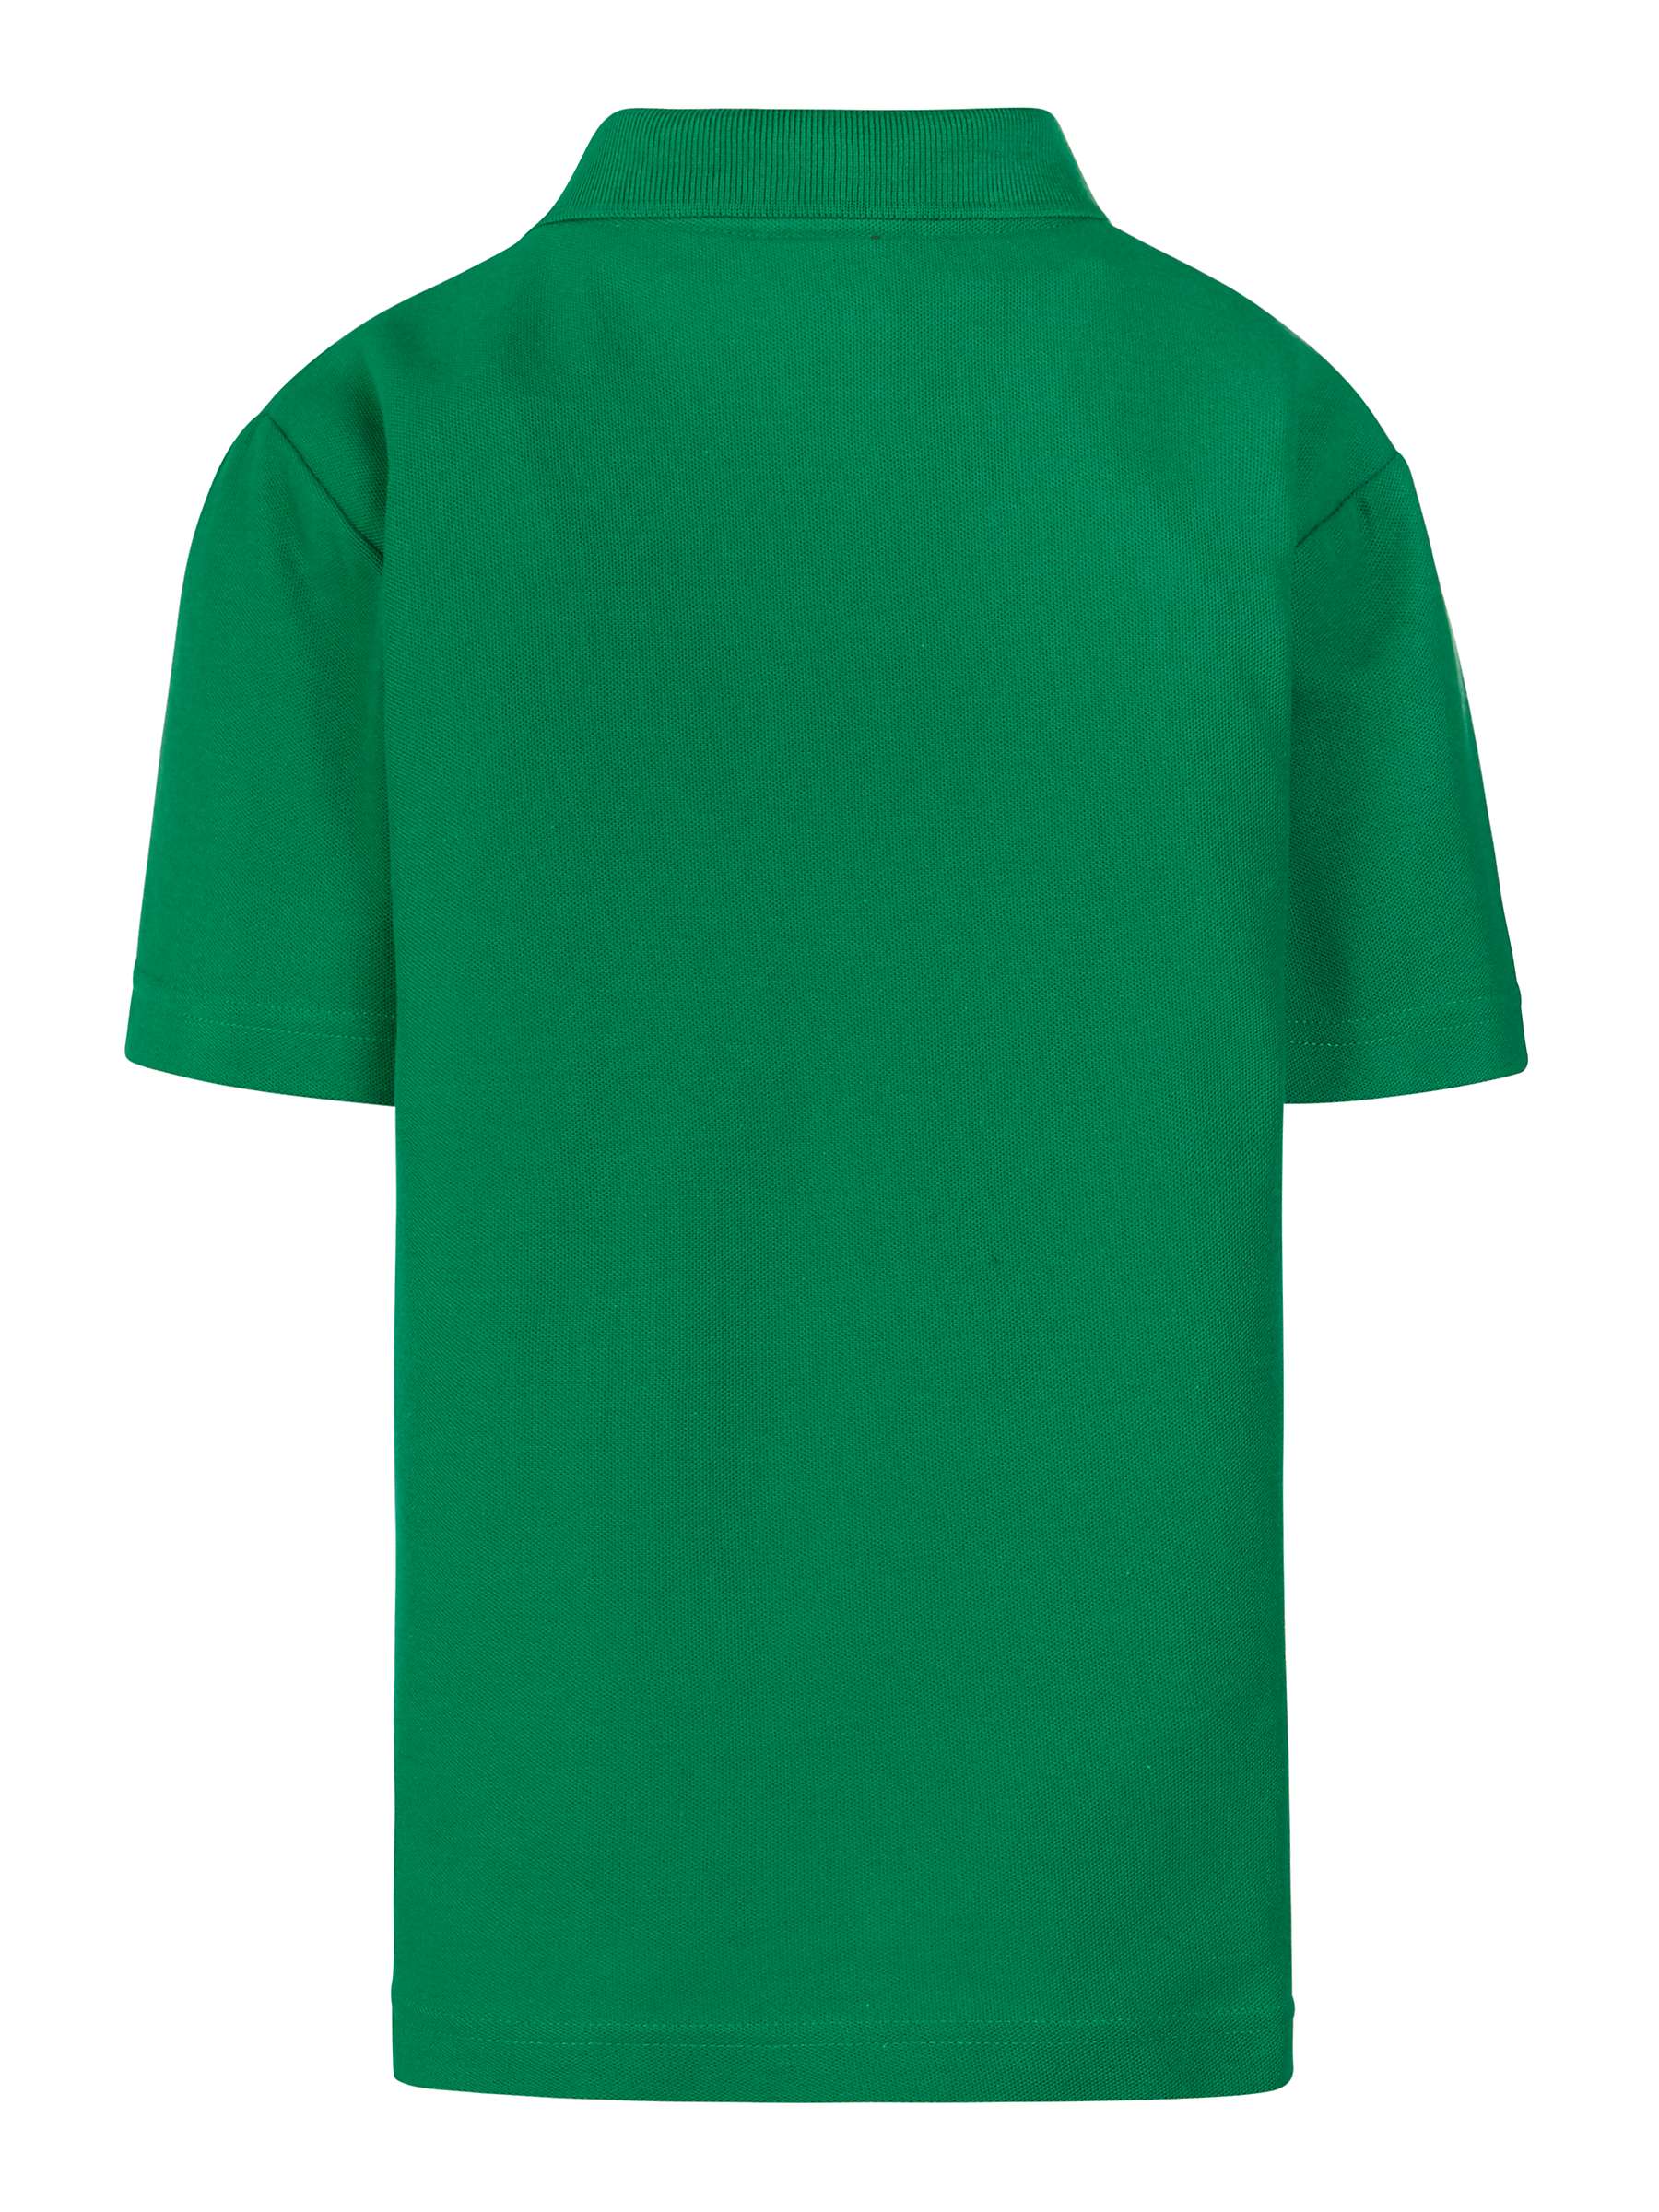 Buy Talbot House Preparatory School Unisex Polo Shirt, Green Online at johnlewis.com